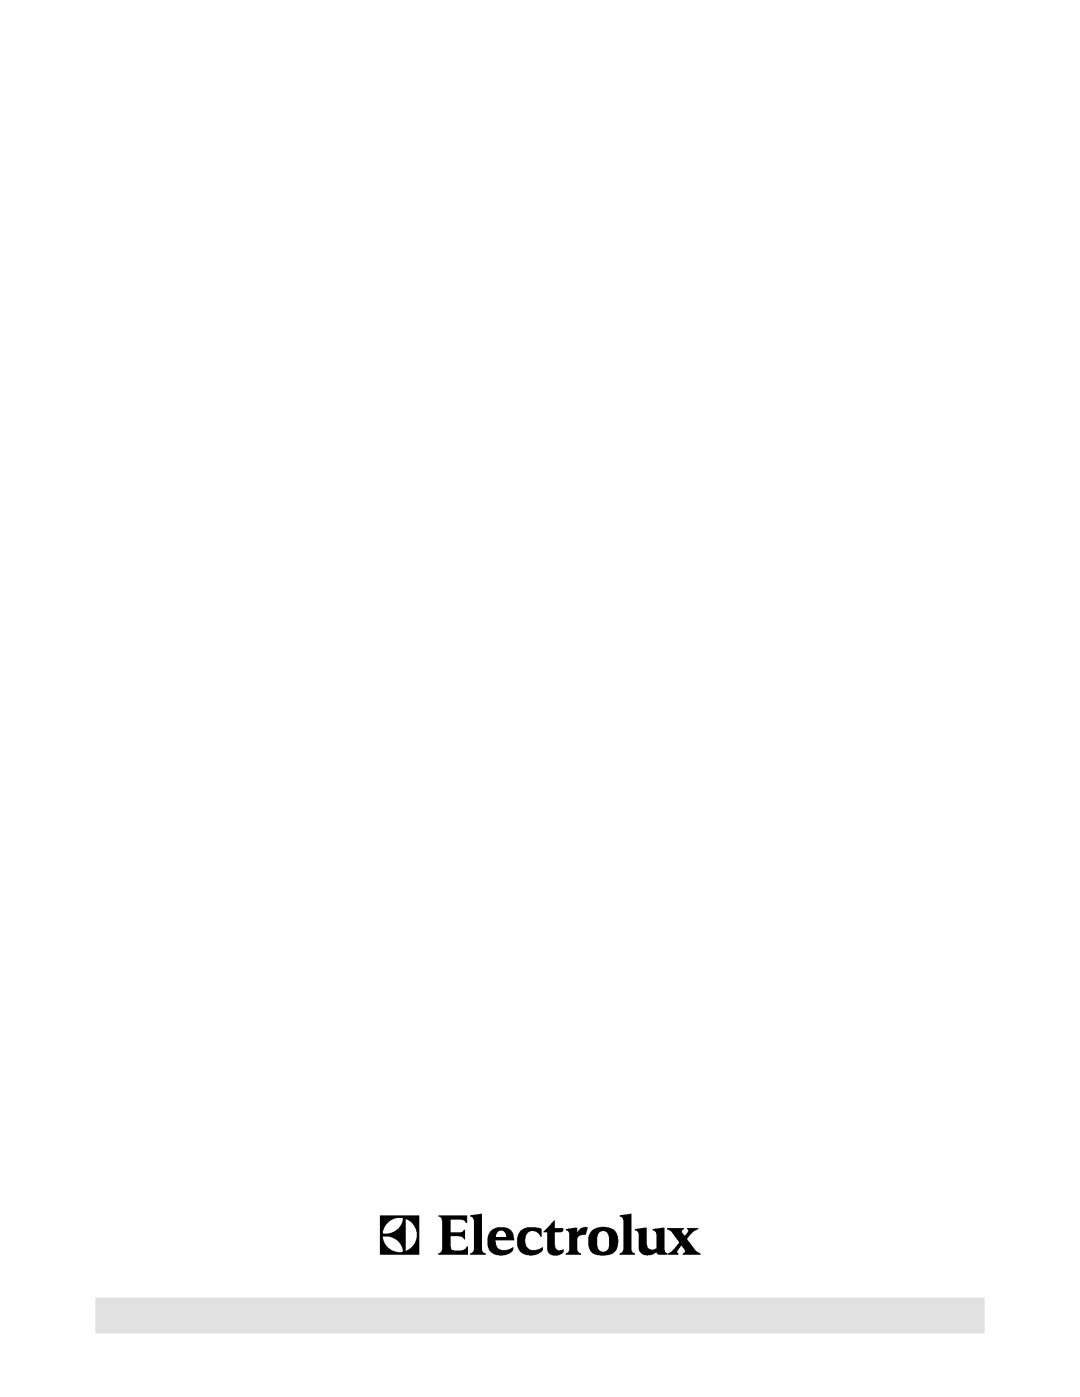 Electrolux 6.75E+11, 2001/05 manual 